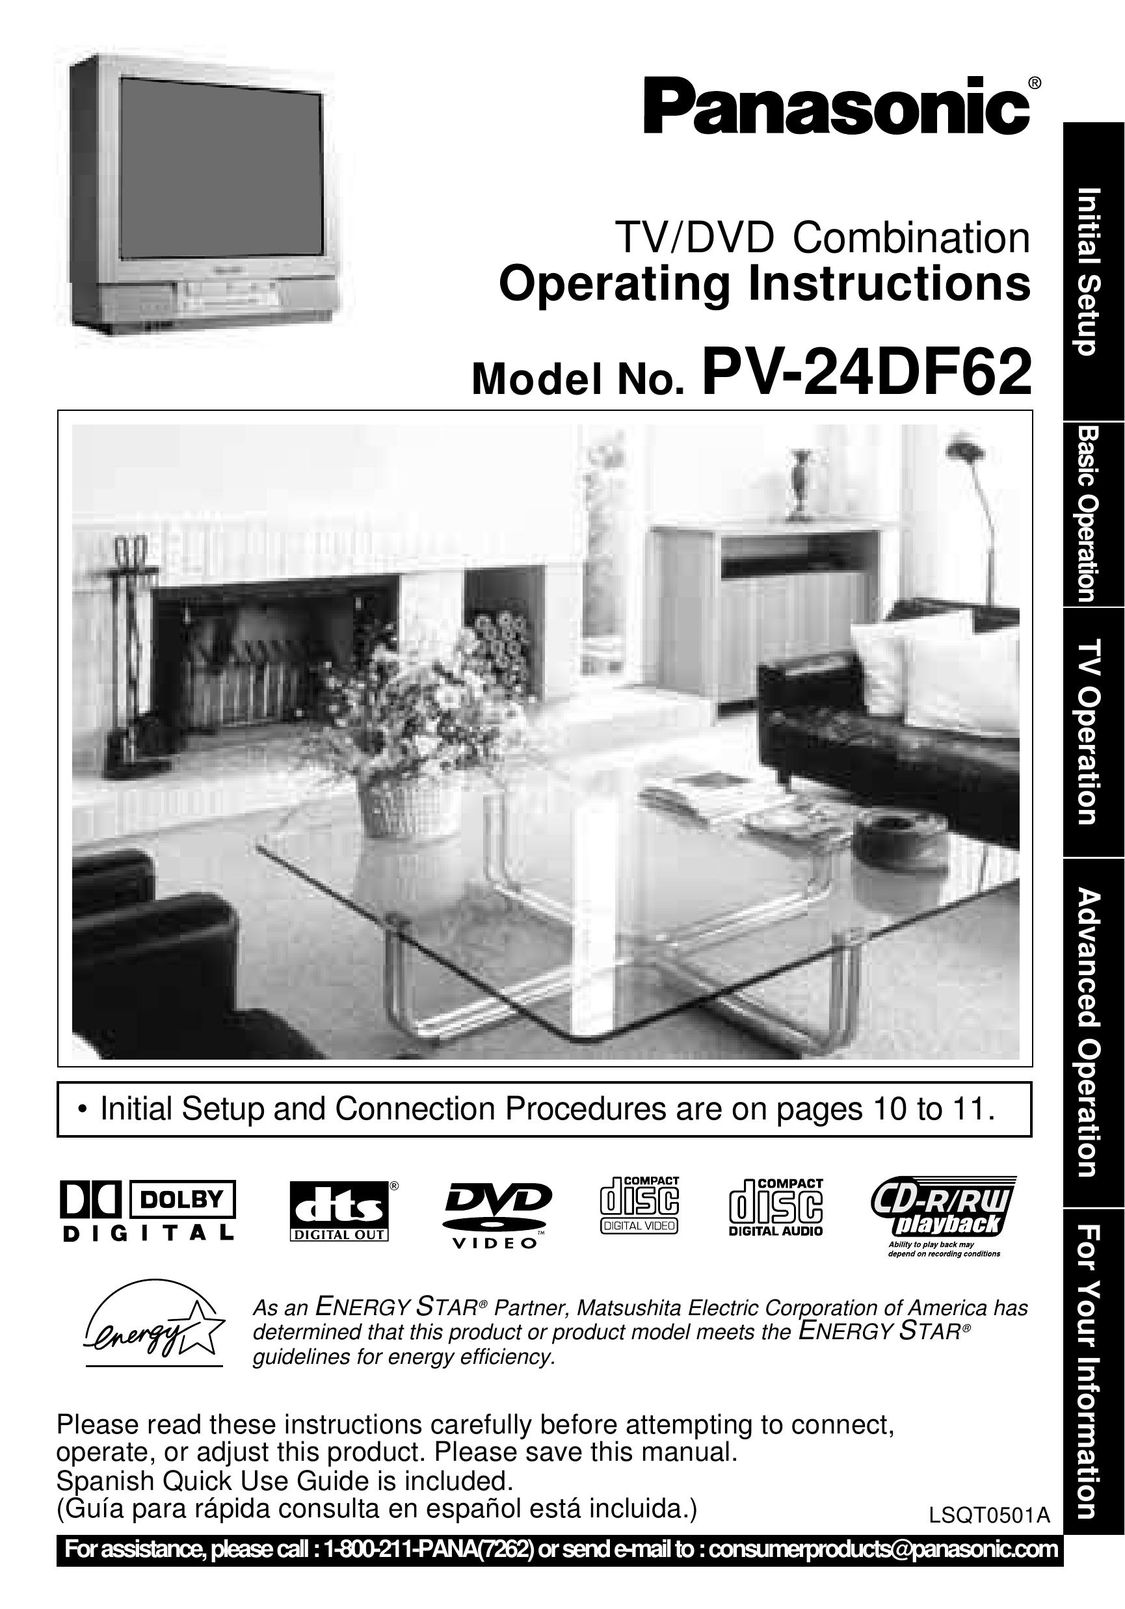 Panasonic PV-24DF62 TV DVD Combo User Manual